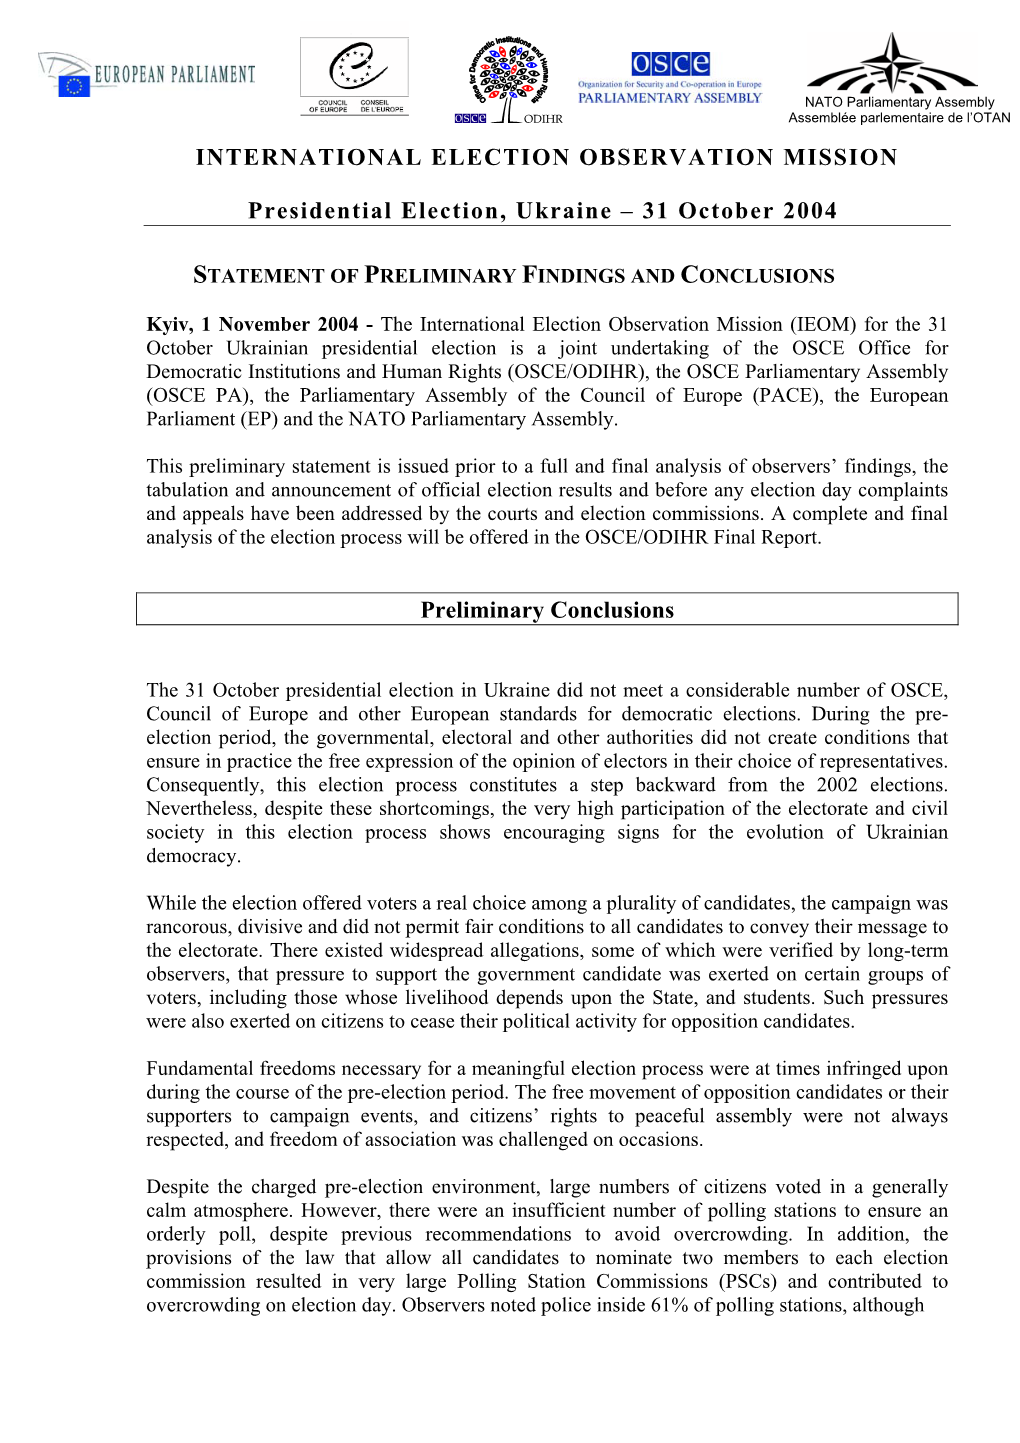 31 October 2004 Preliminary Conclusions